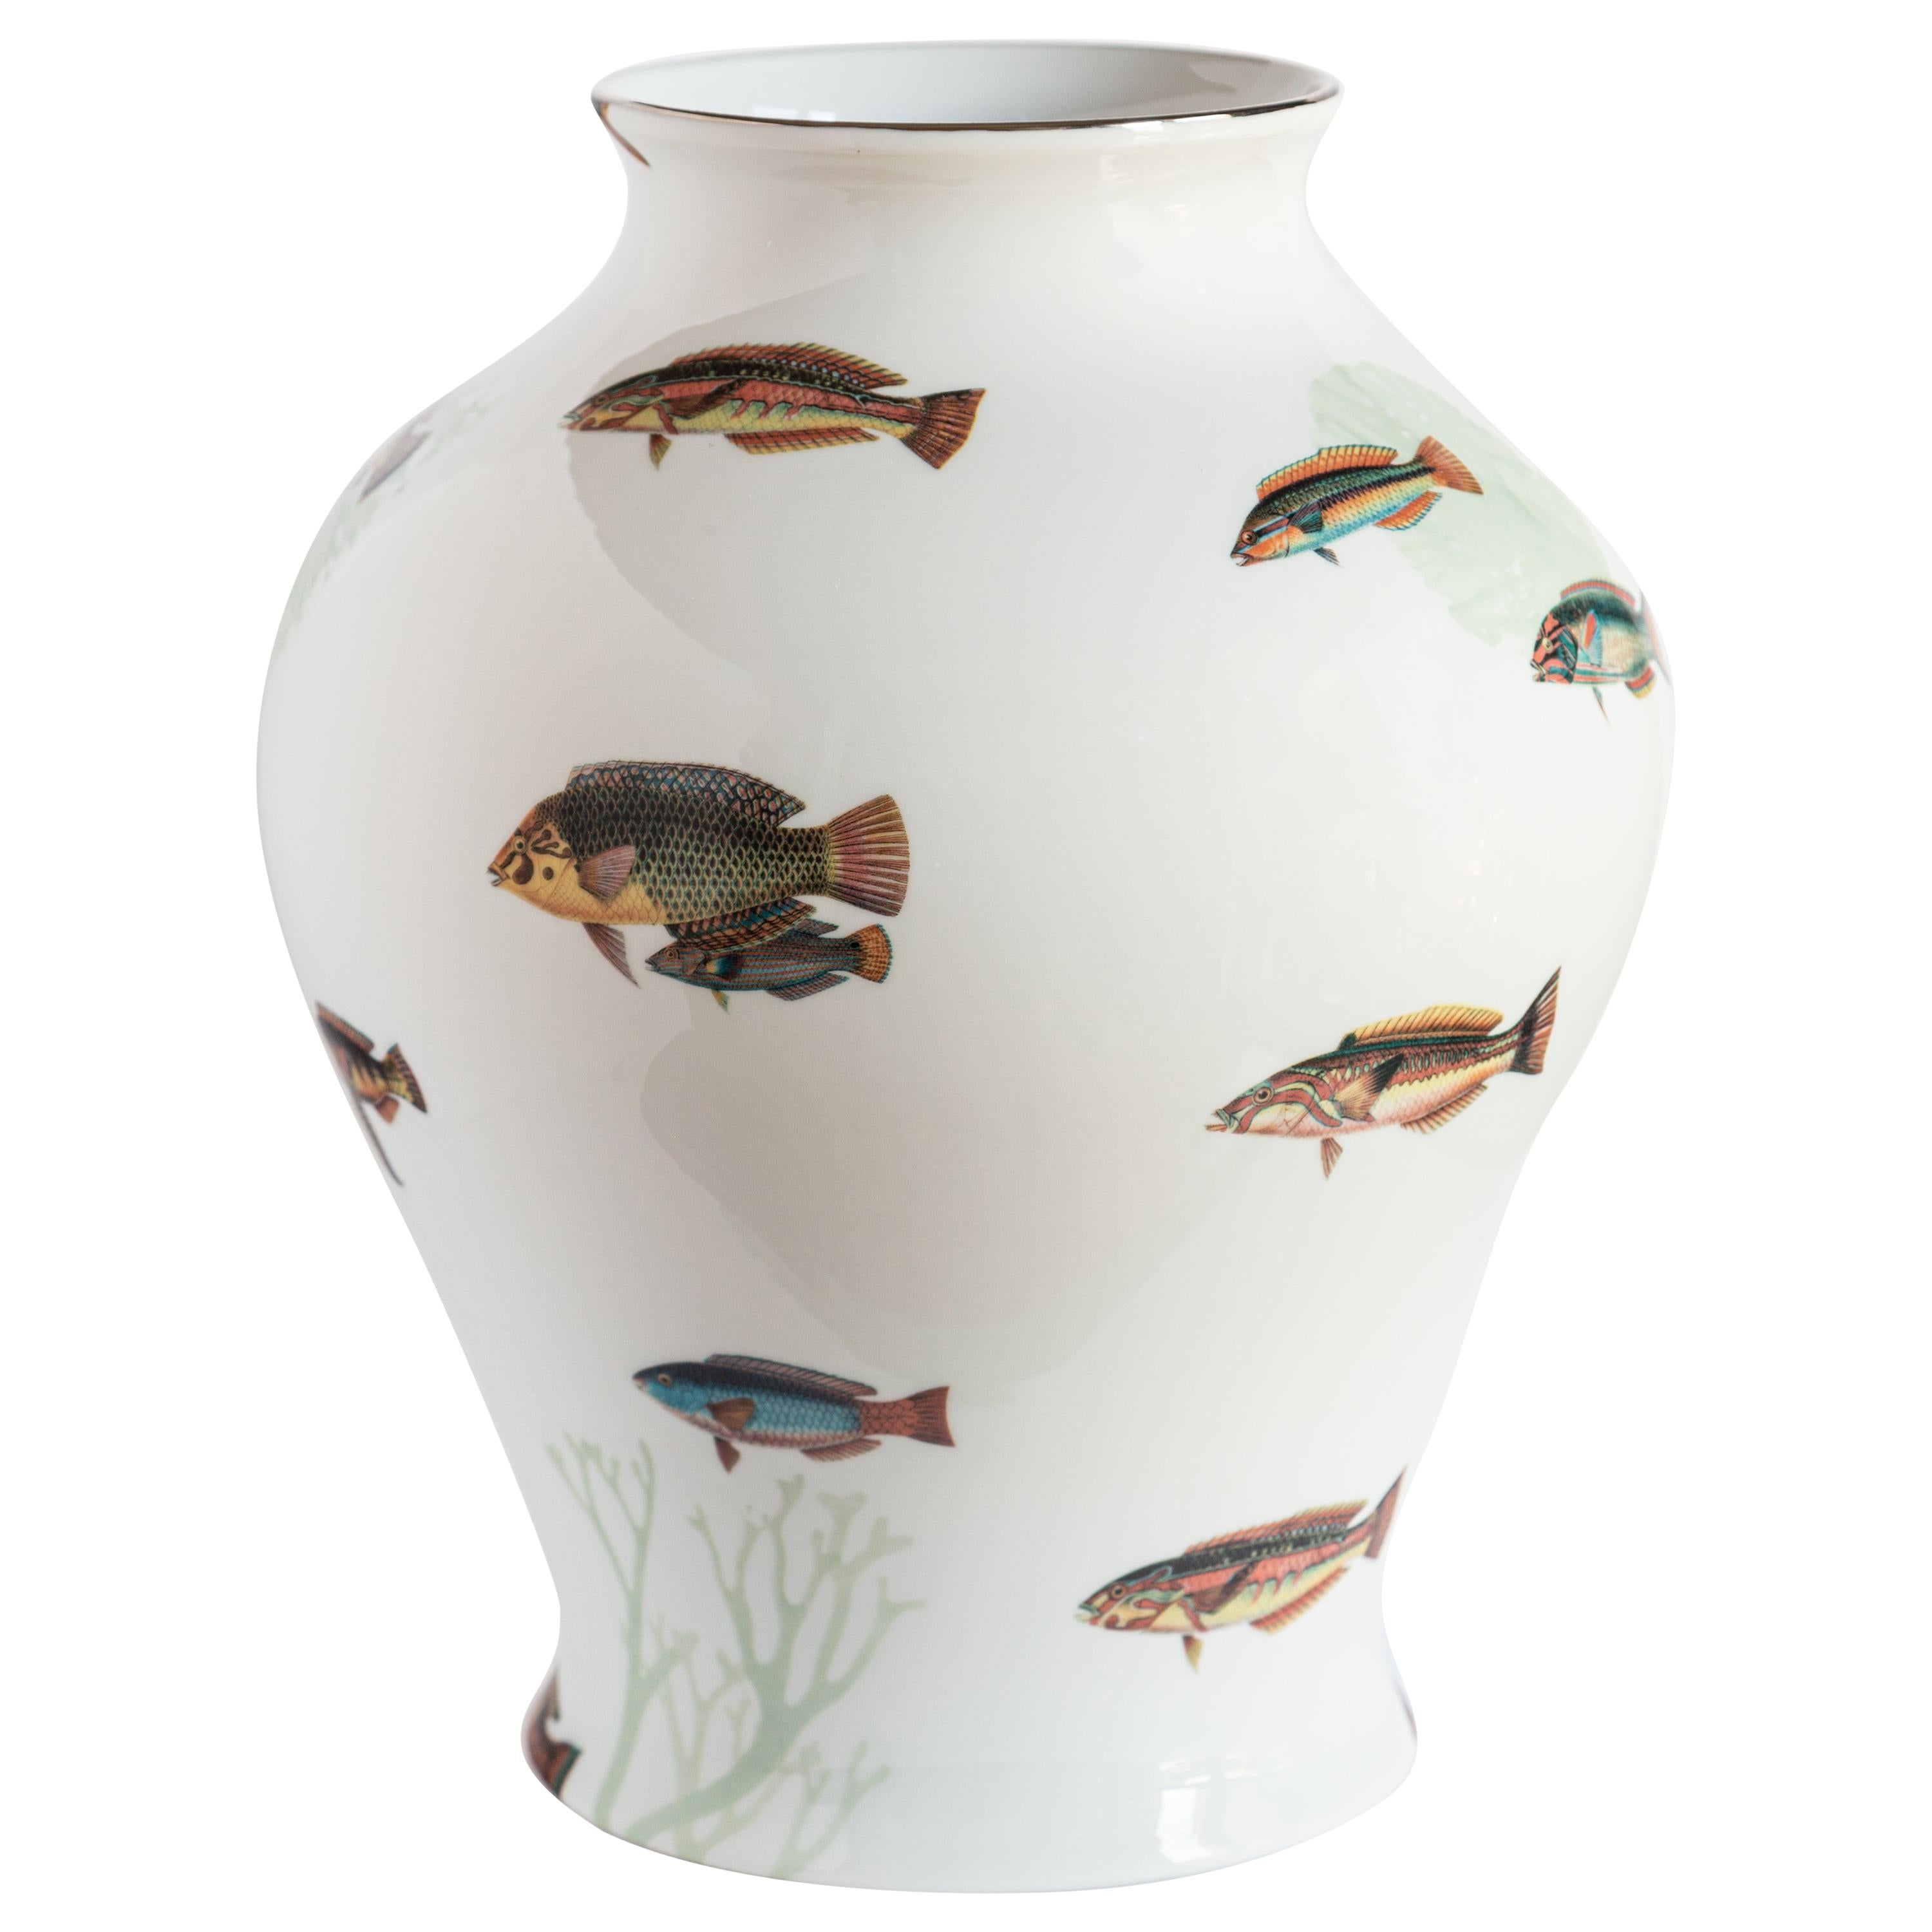 Amami, Contemporary Porcelain Vase with Decorative Design by Vito Nesta